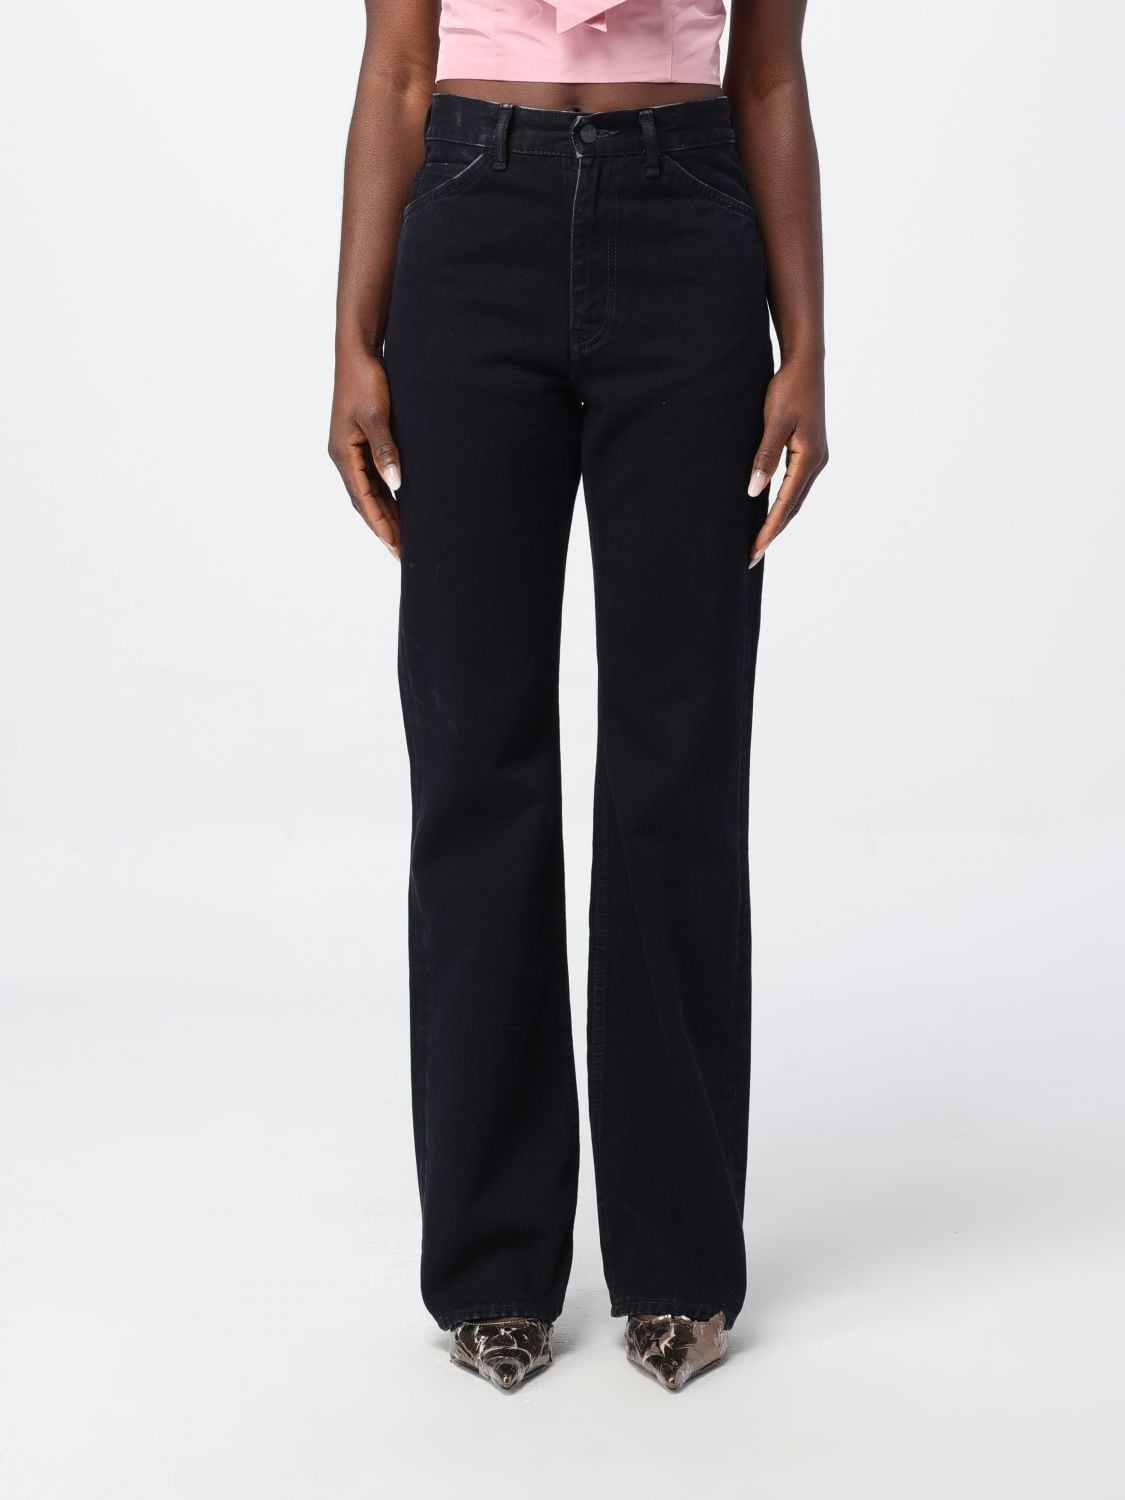 Acne Studios Jeans Woman Black Woman - Walmart.com